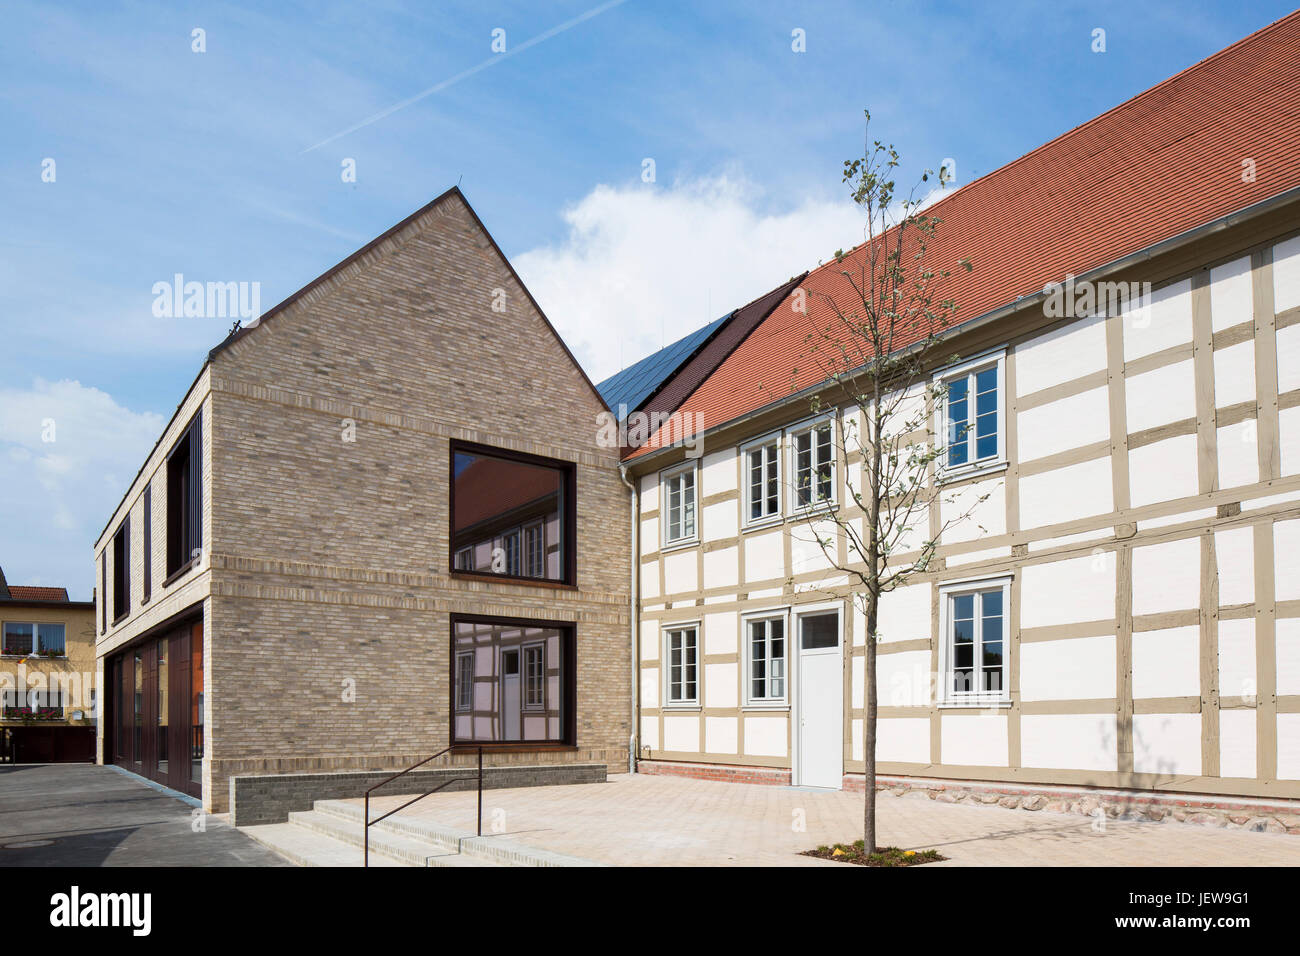 Facade juxtaposition. Kindergarten Mitte Kyritz, Kyritz, Germany. Architect: kleyer koblitz letzel freivogel, 2016. Stock Photo